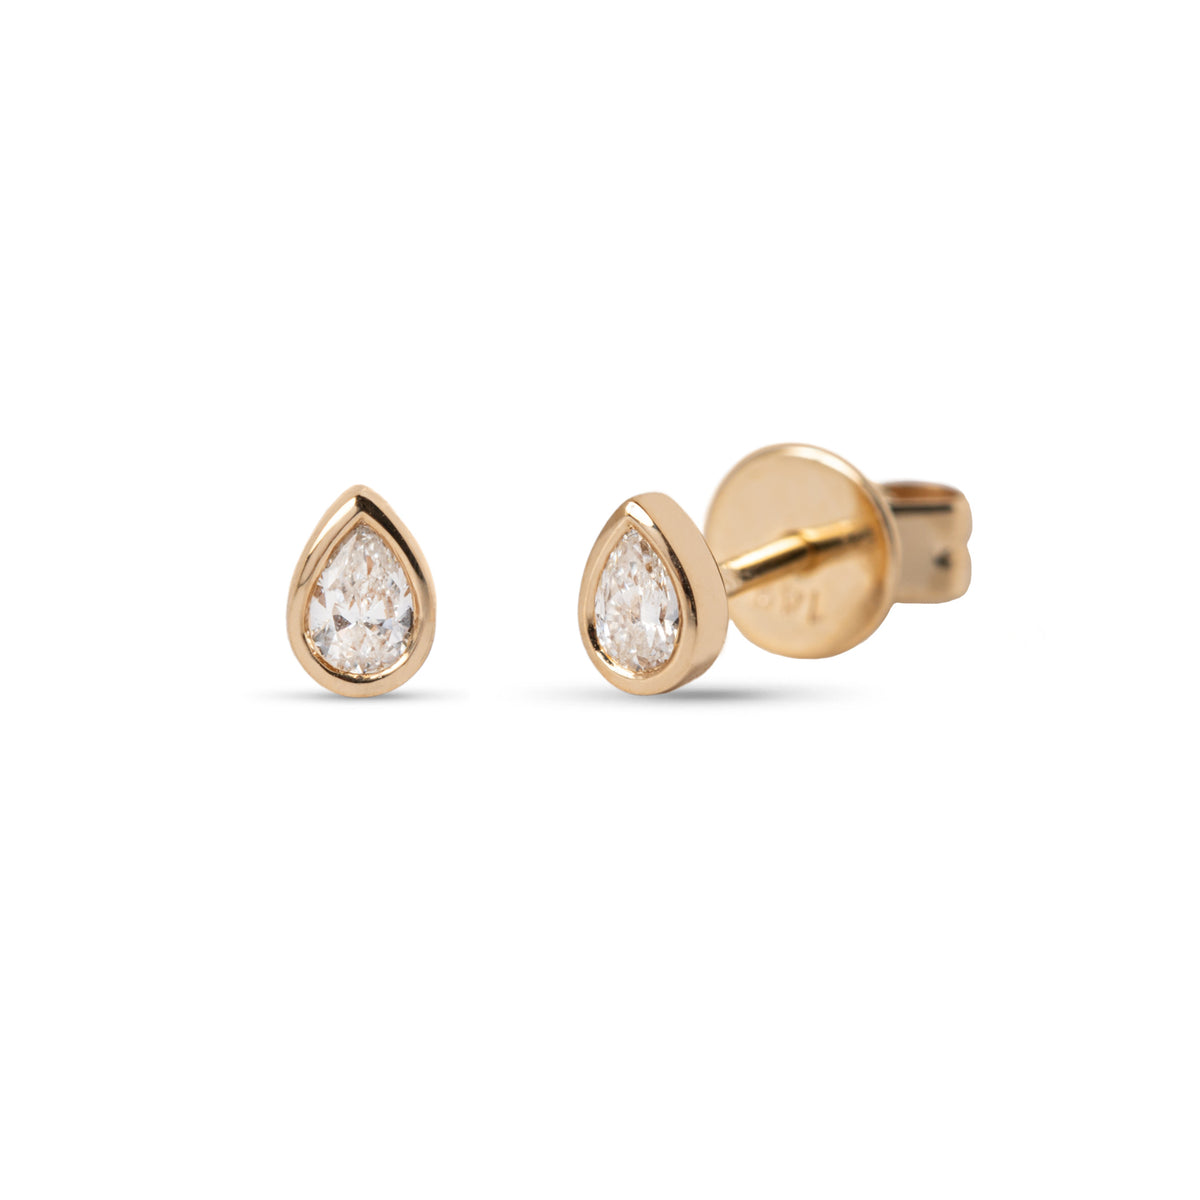 14k yellow or white gold bezel set pear diamond stud earrings